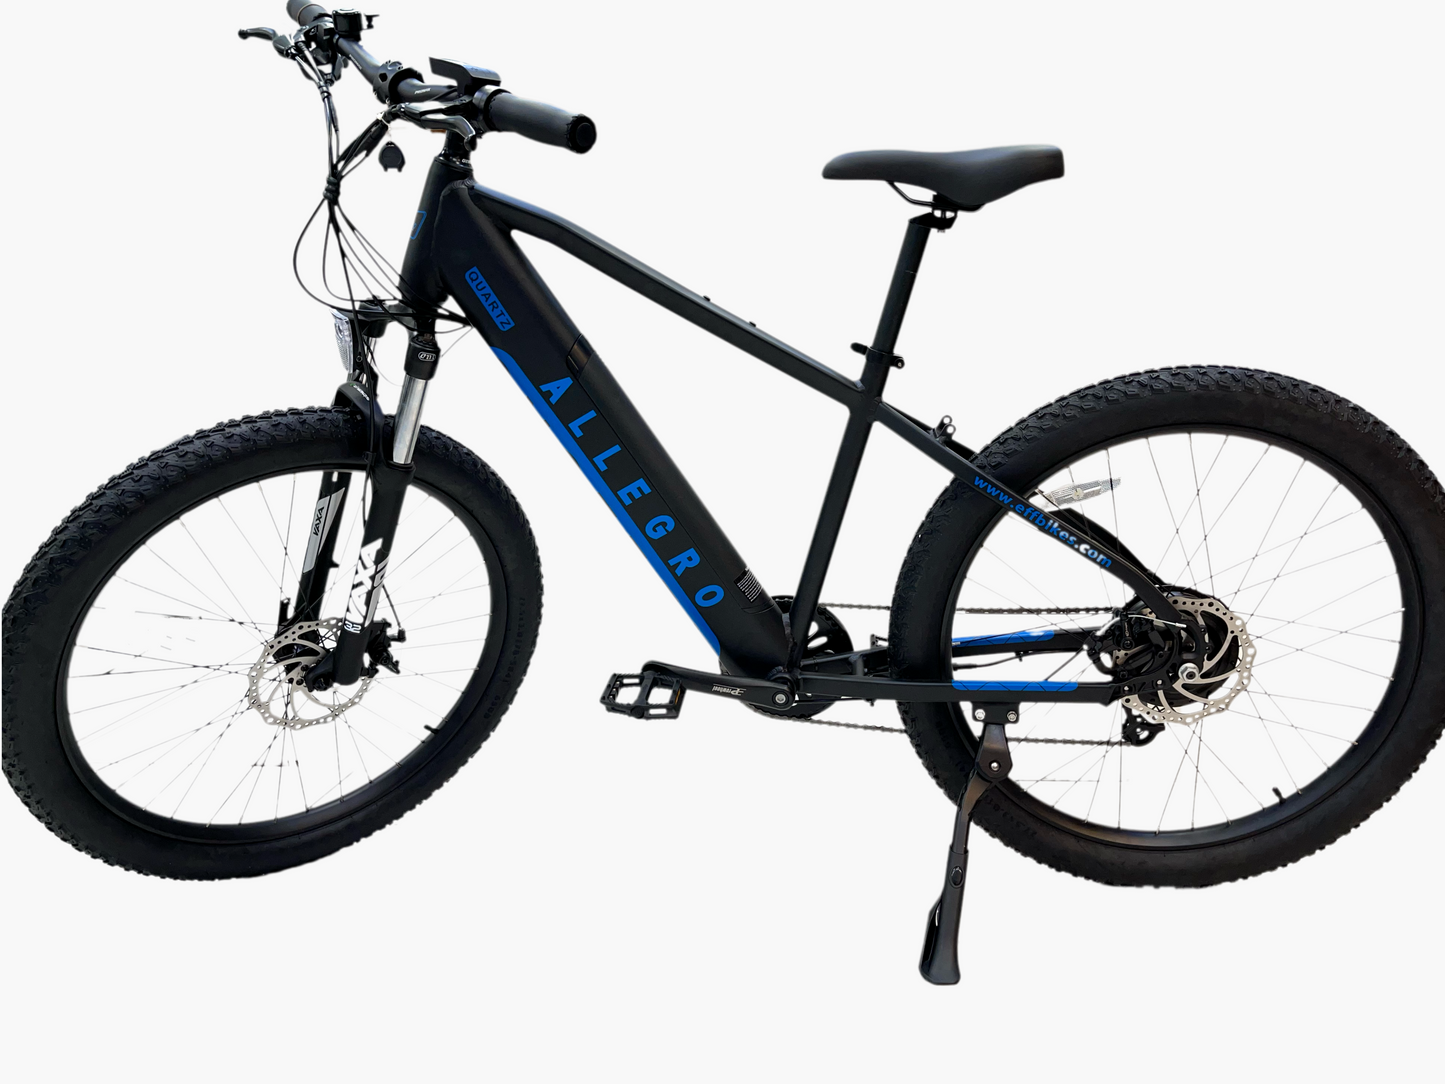 Black Eff Bike Allegro Quartz Electric Bike showcasing side profile and wheels